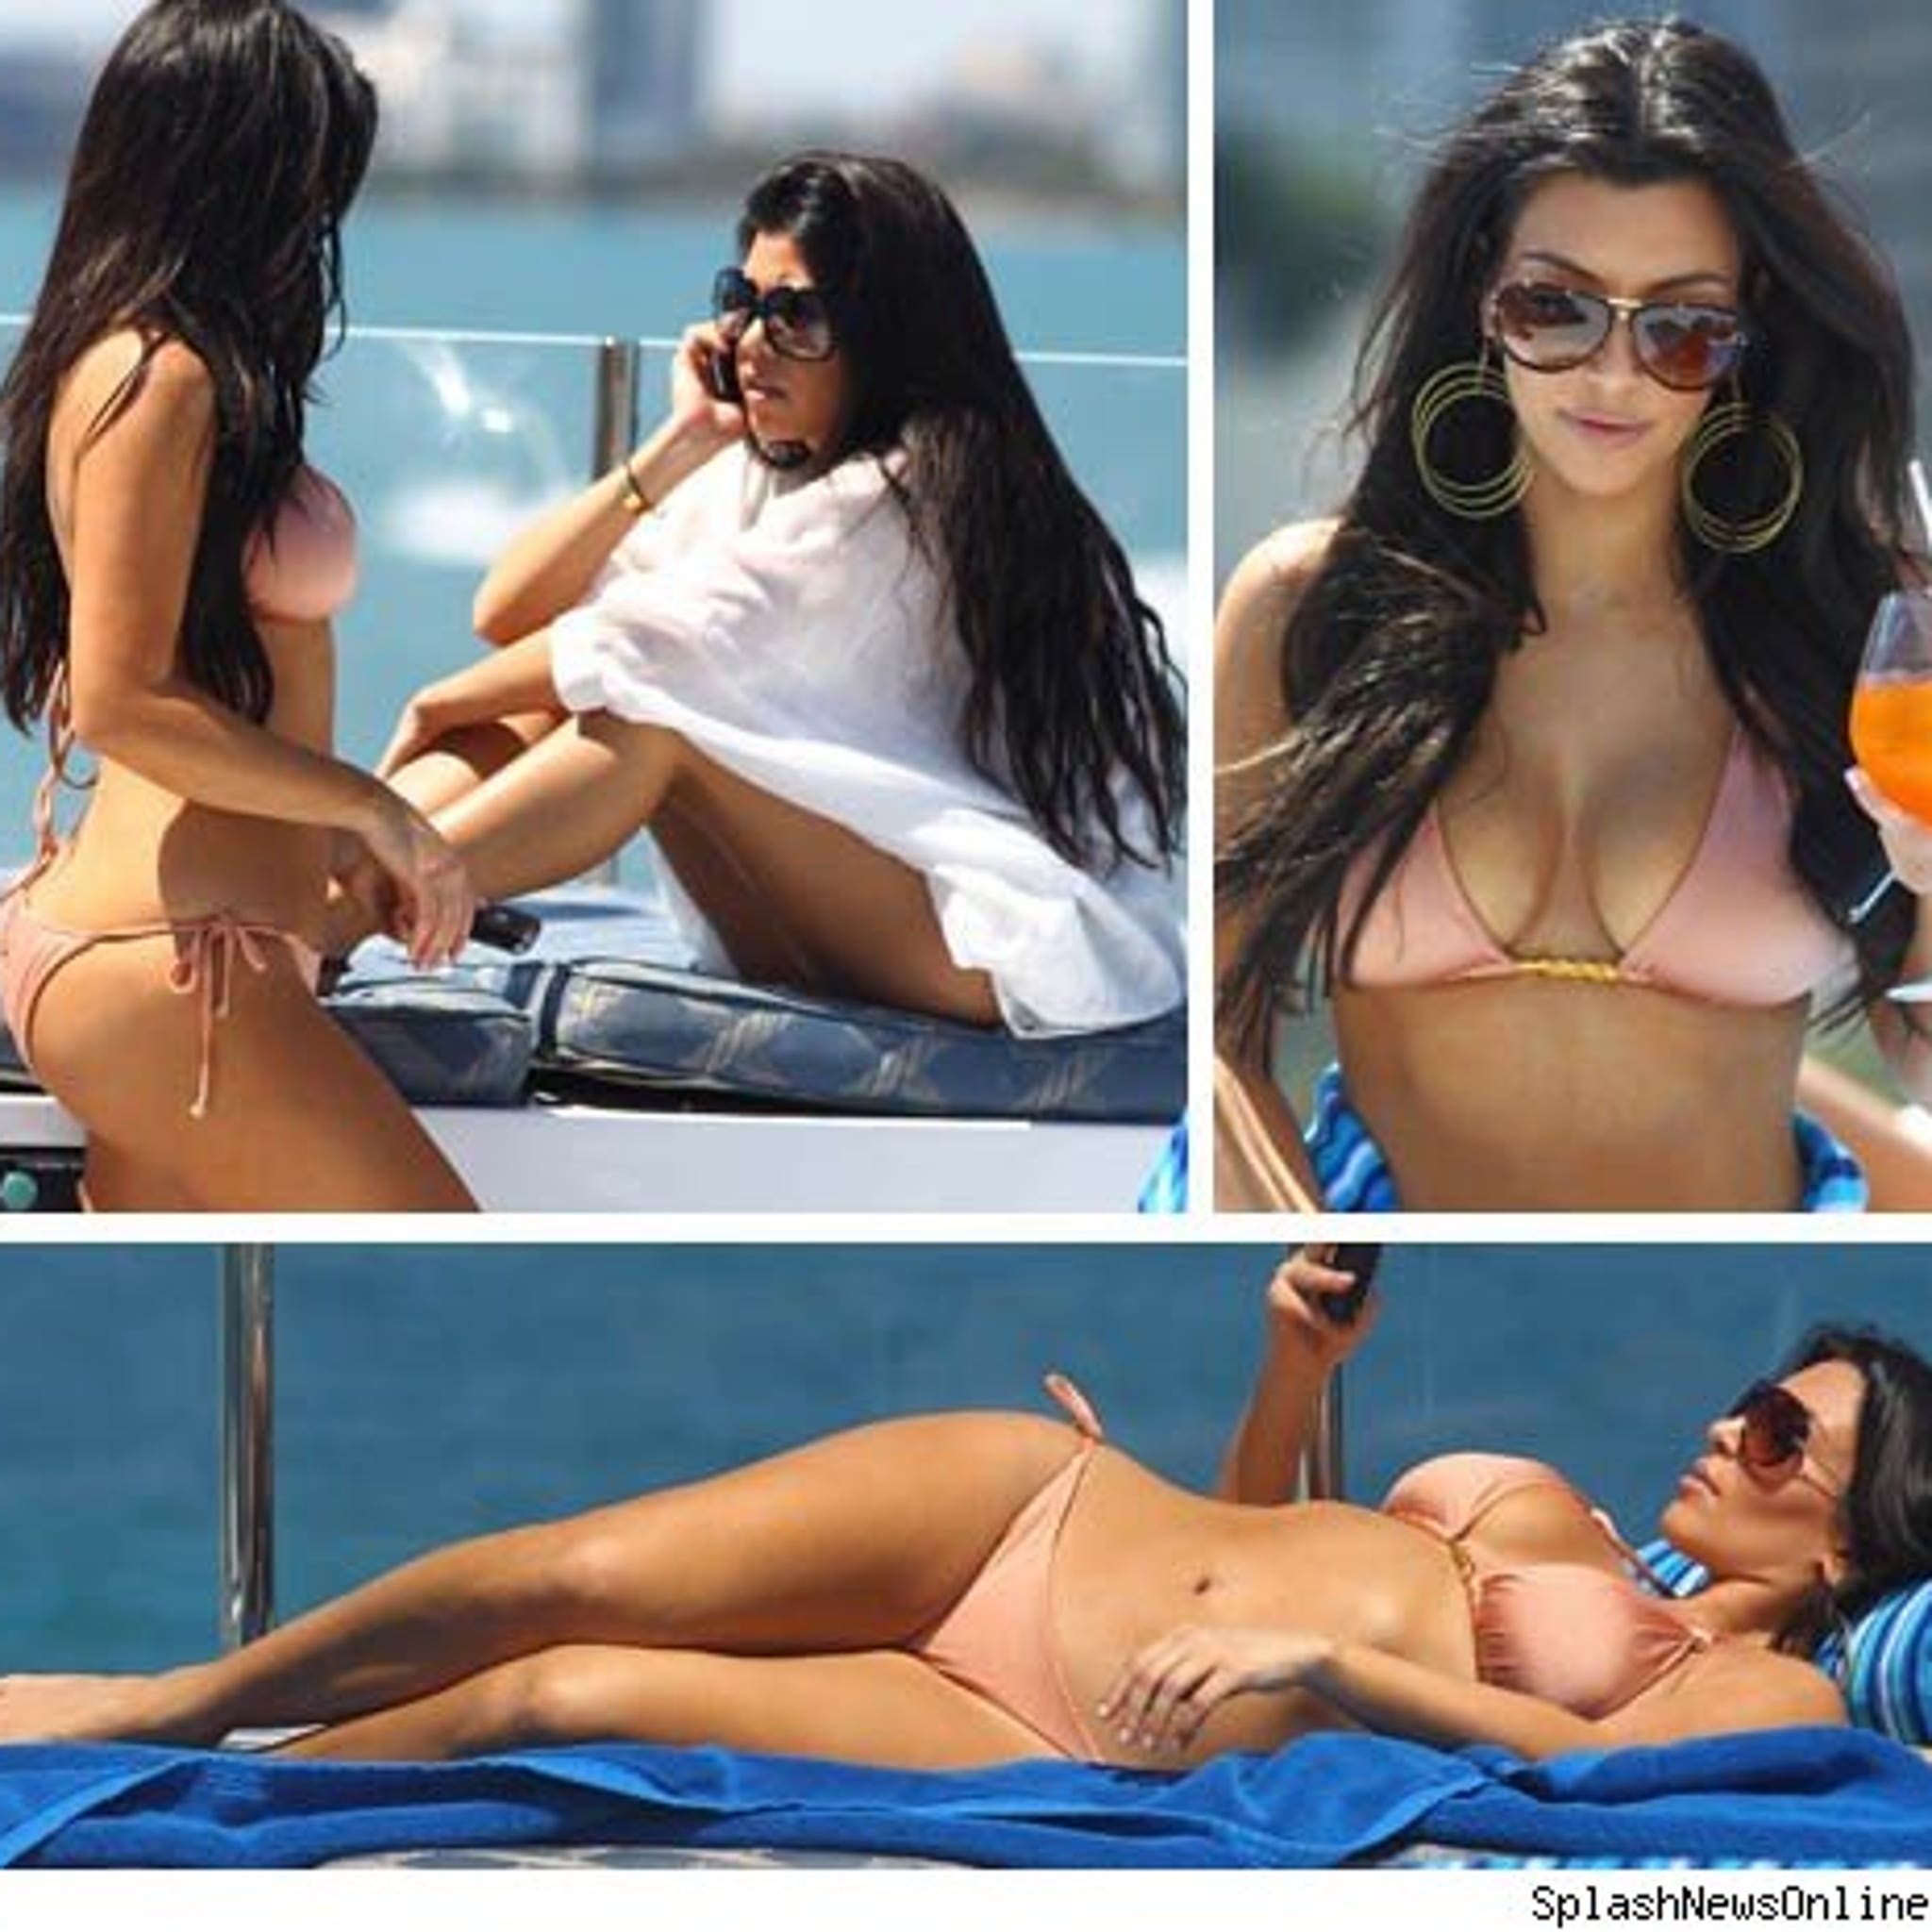 Kim Kardashian Goes Nude in Miami pic